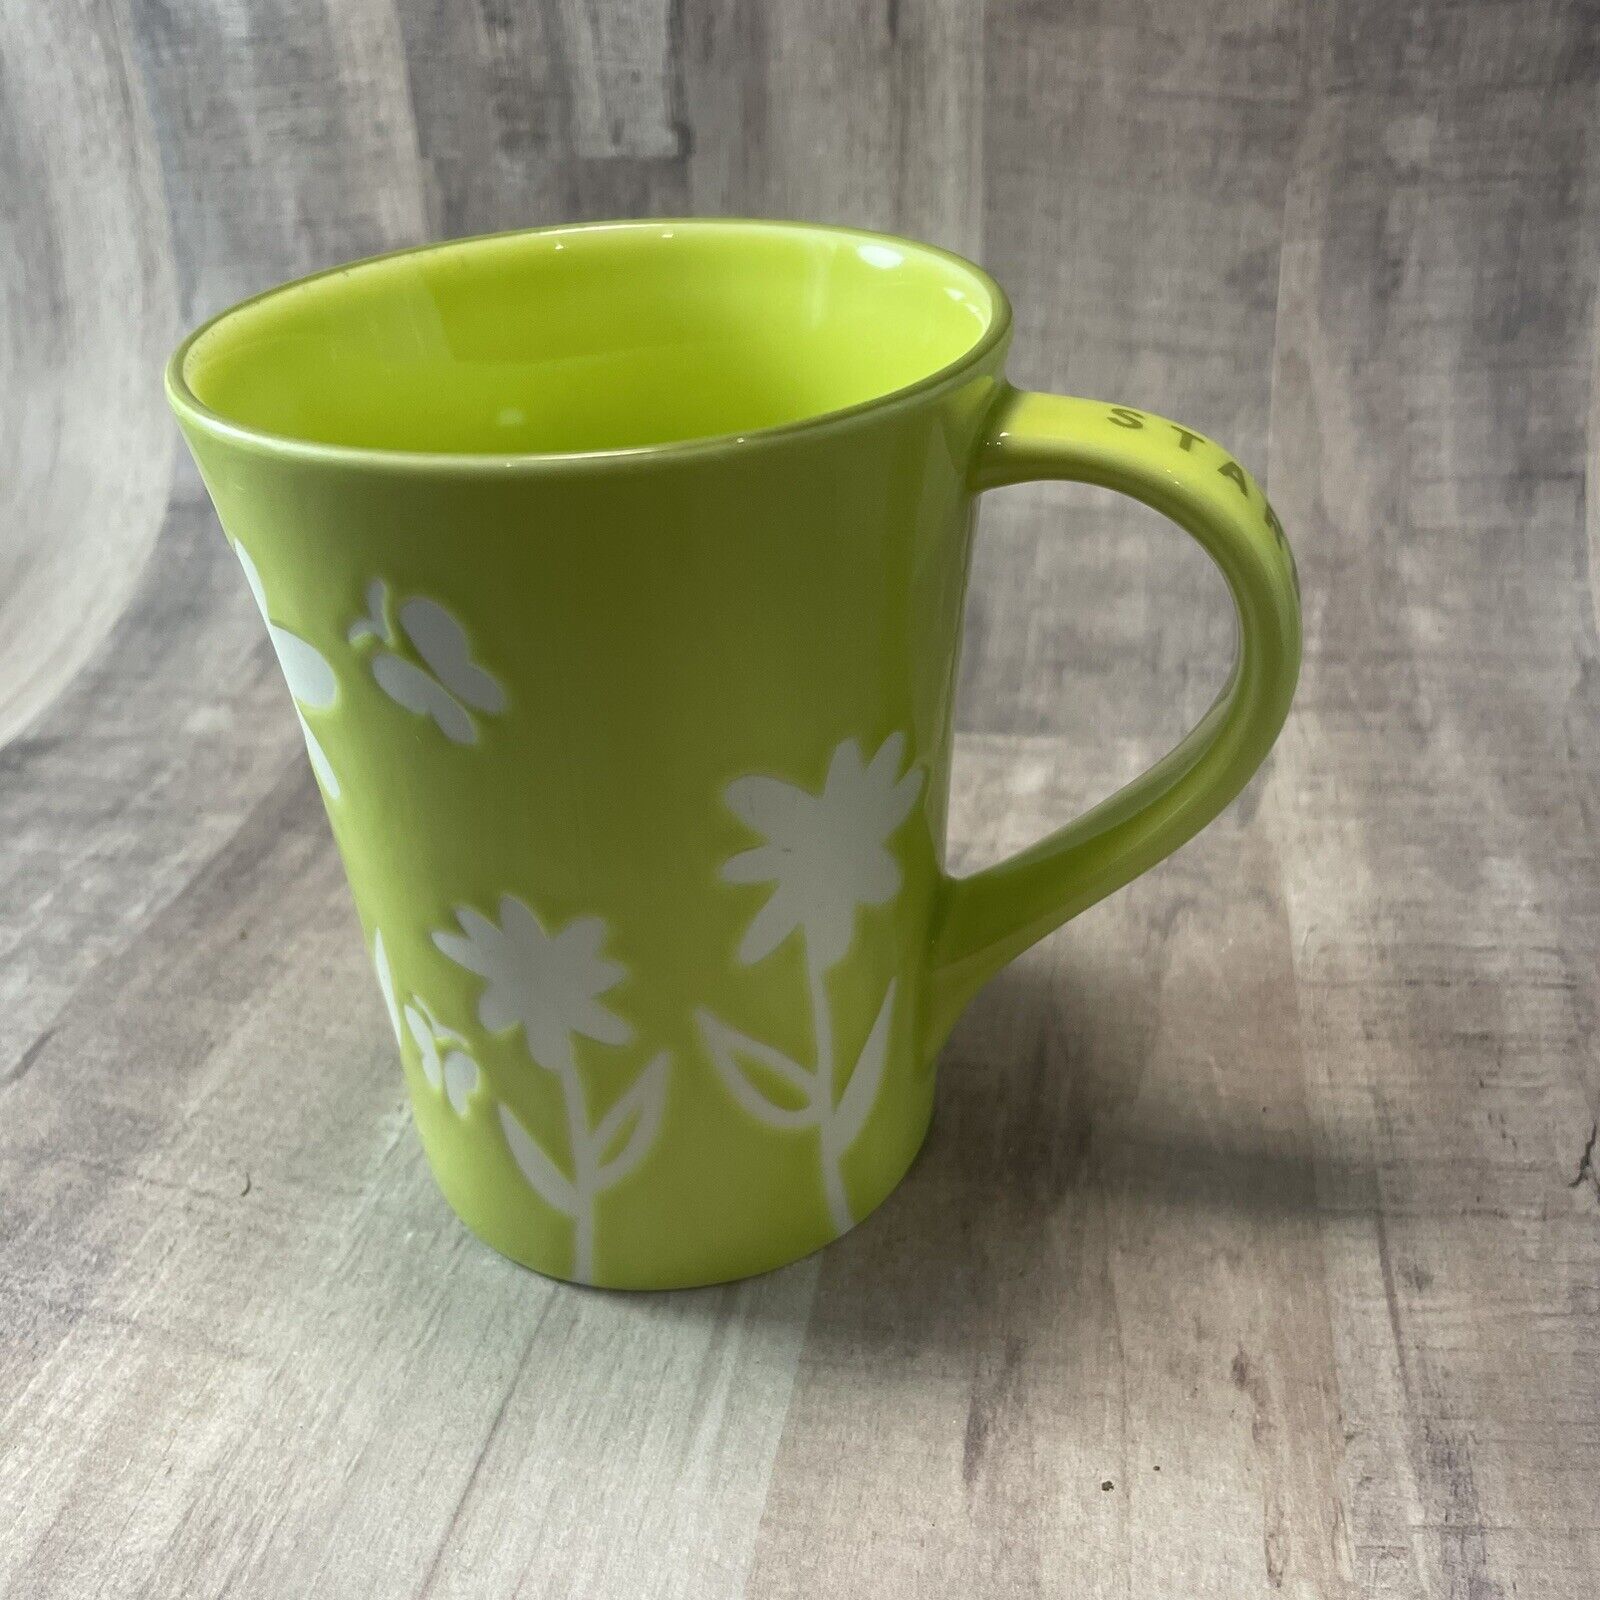 2007 Starbucks Lime Green with White Flowers & Butterflies, 12 oz Coffee/Tea Mug